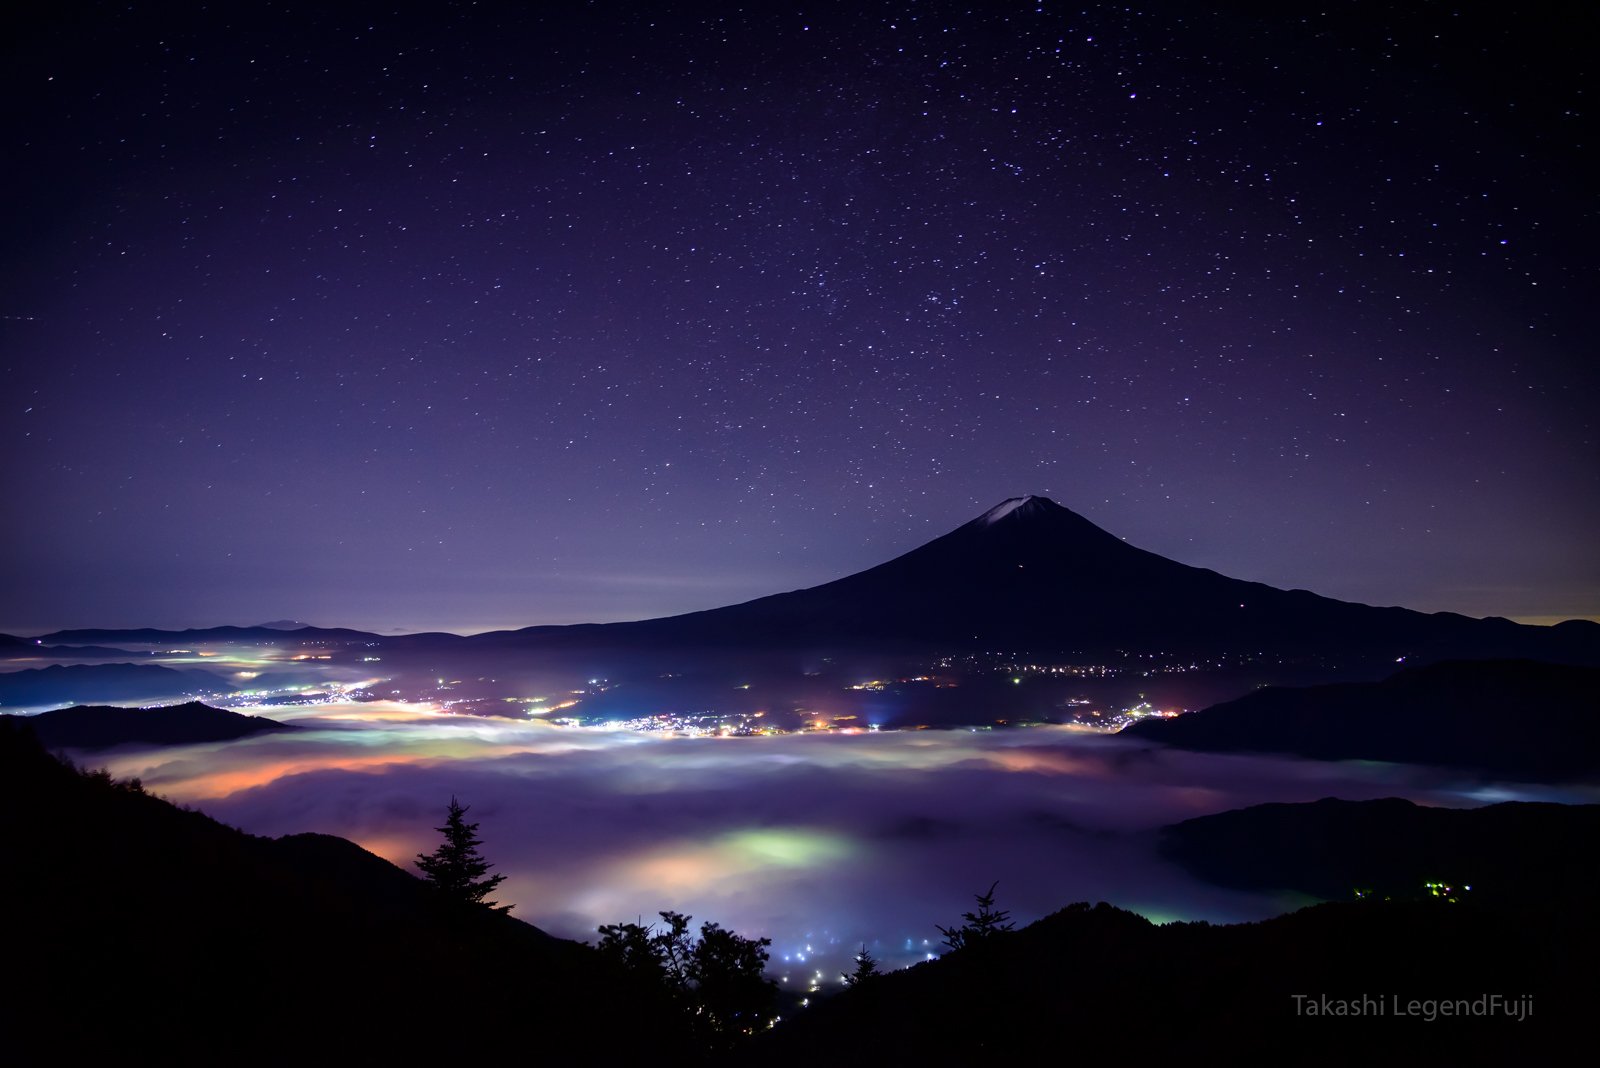 Fuji,mountain,Japan,night,star,sky,cloud,light,, Takashi